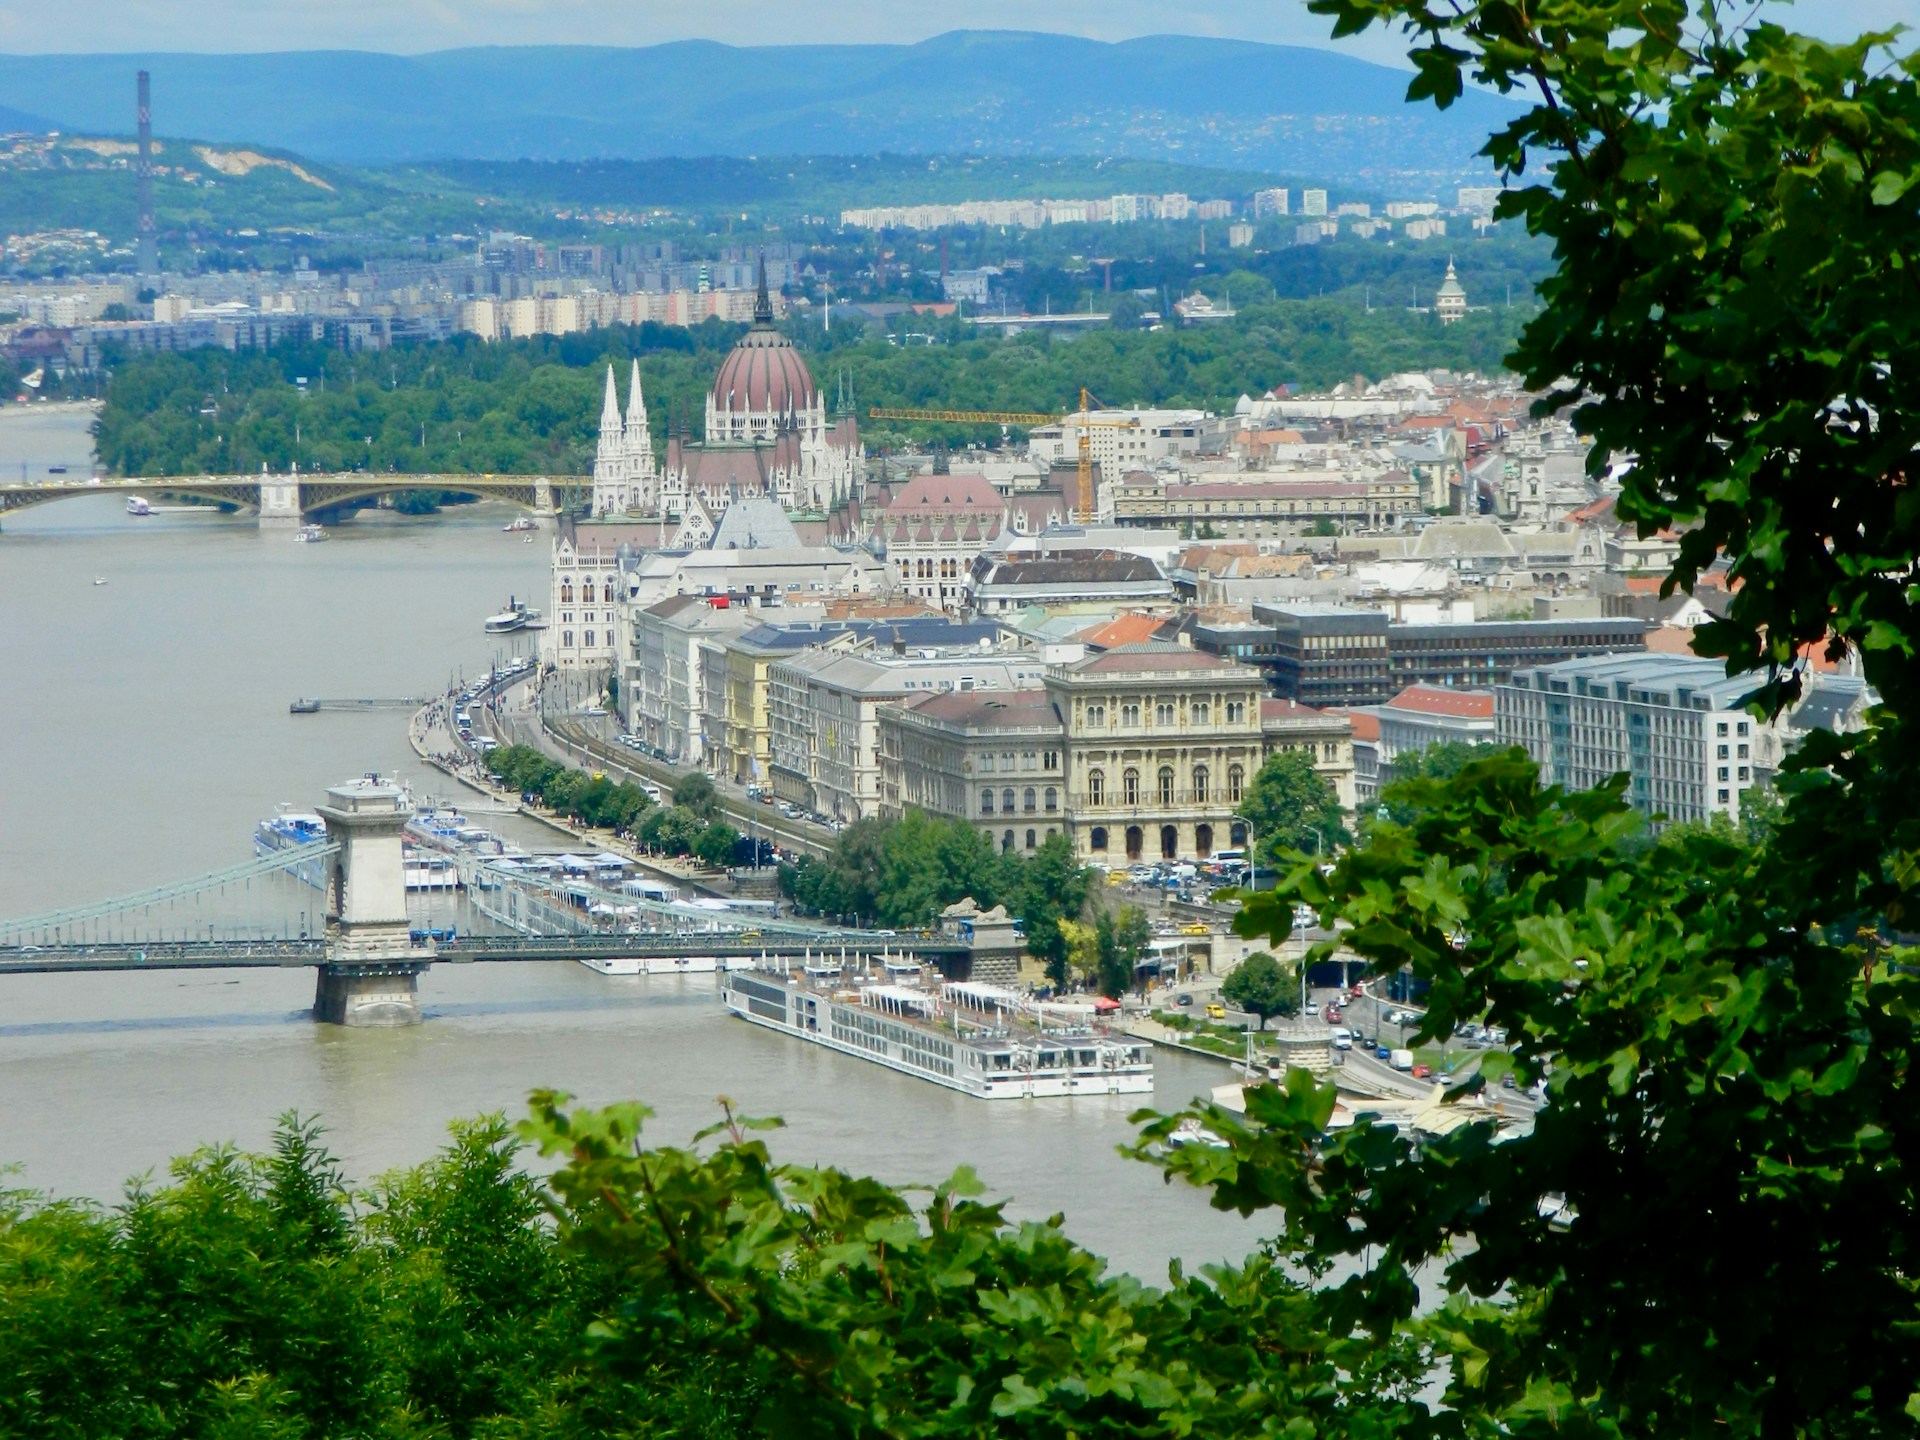 Bridges over the Danube River